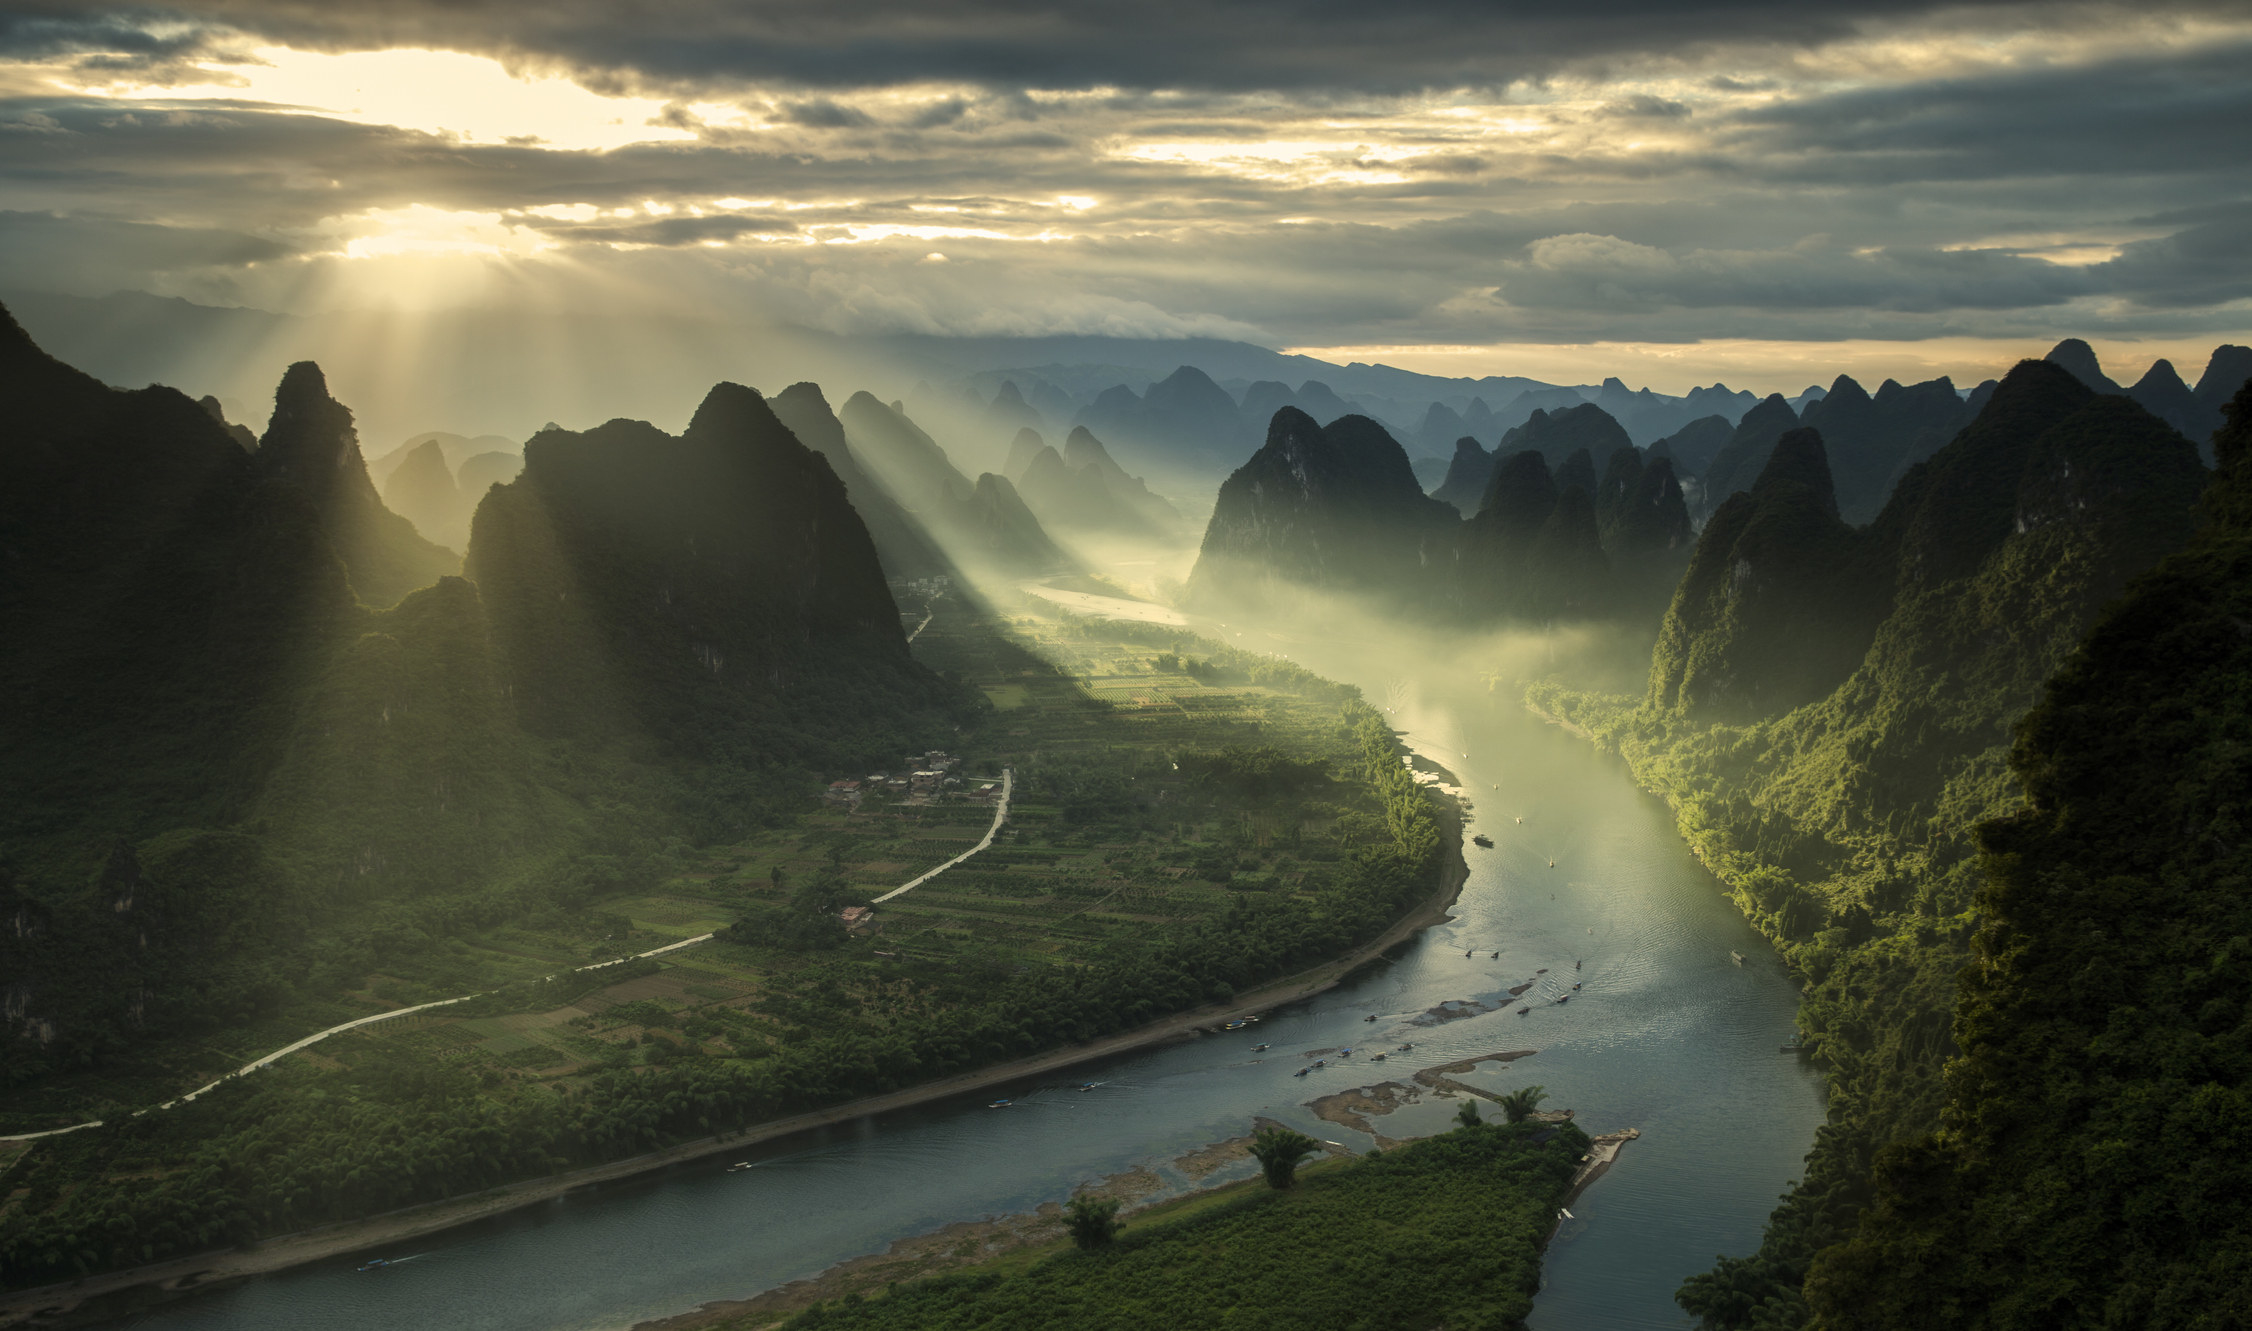 The Li River in China.